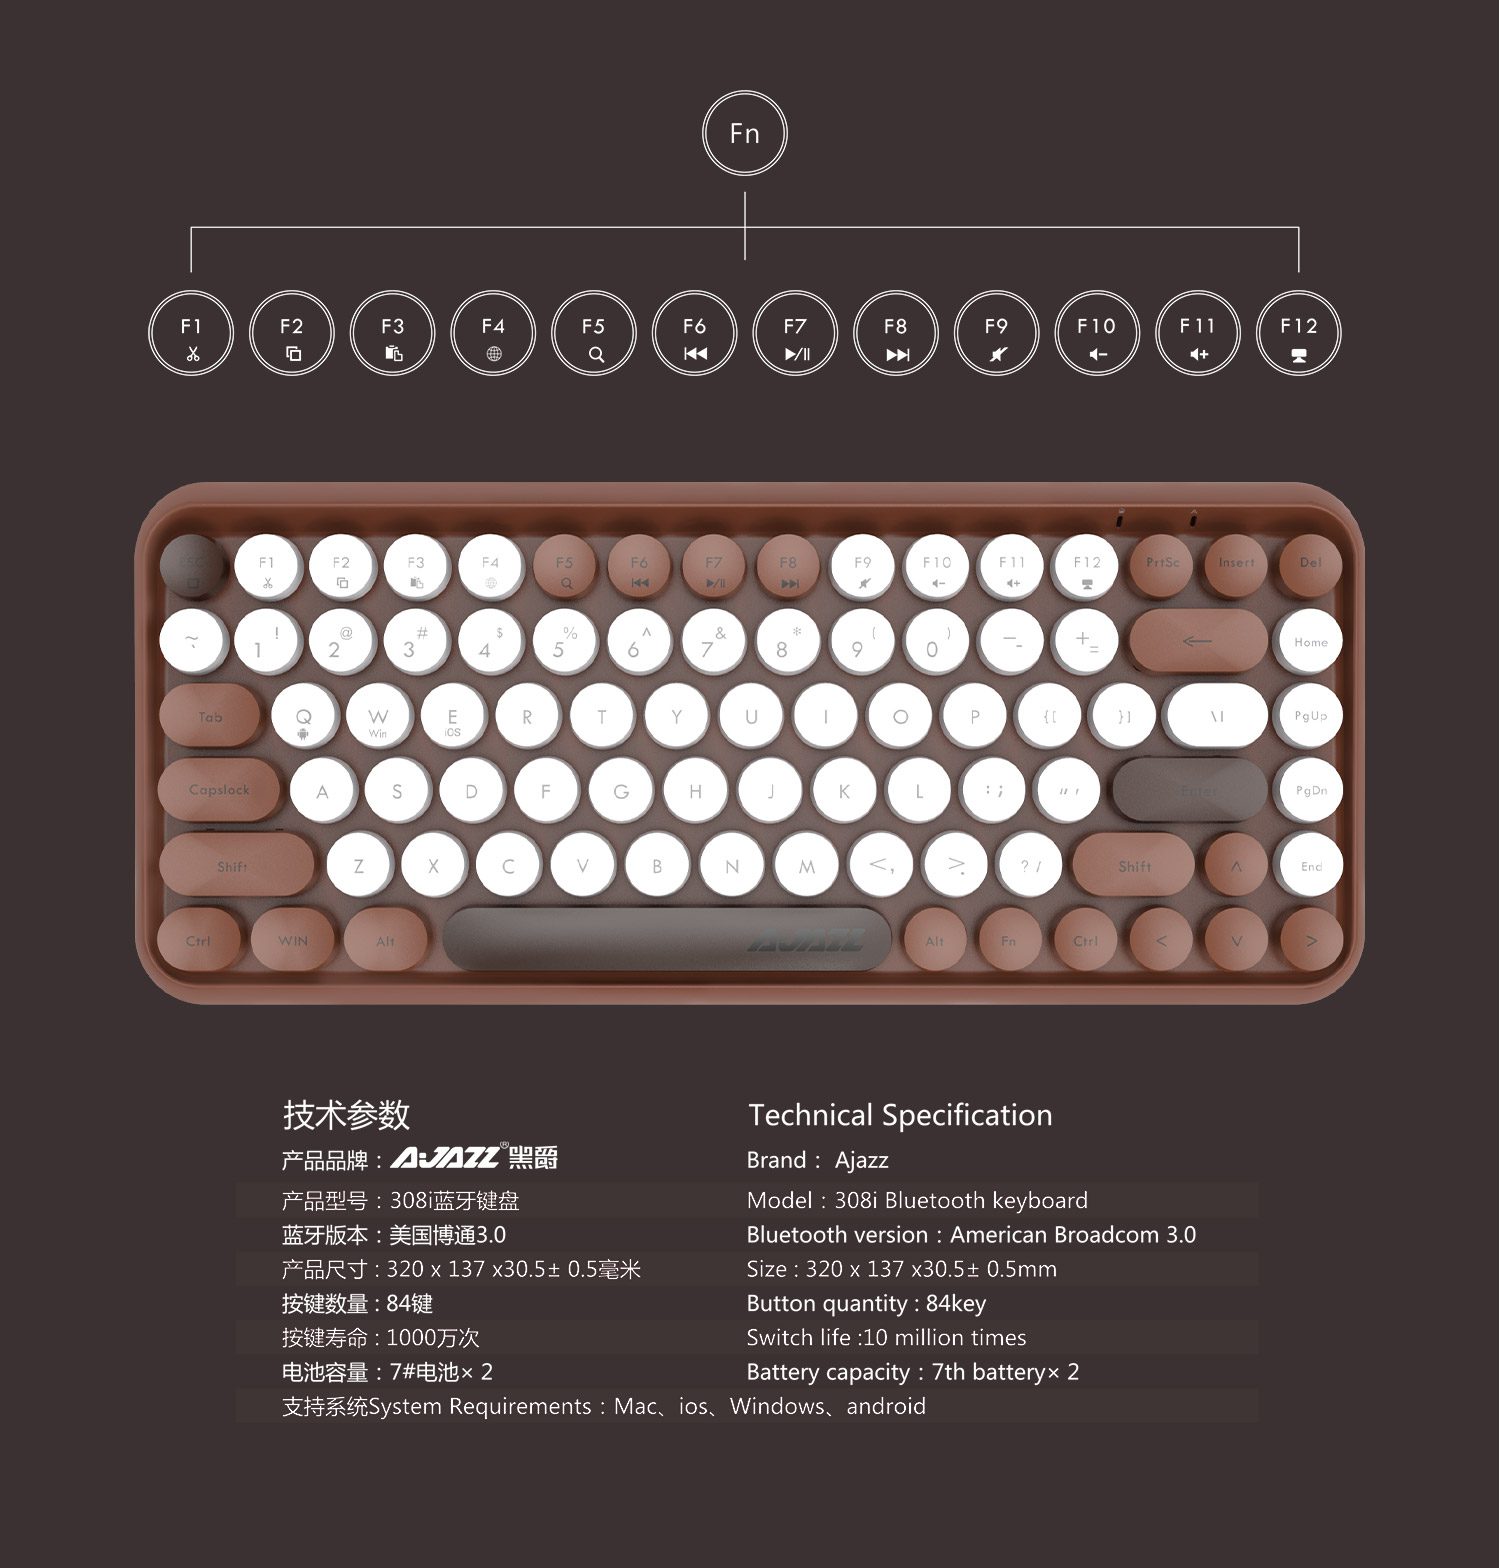 AJazz 308I Wireless Skyloong Mini Portable Keyboard 84Key Retro Typewriter Round Cap BT Keyboards for PC Laptop Win/iOS/Android